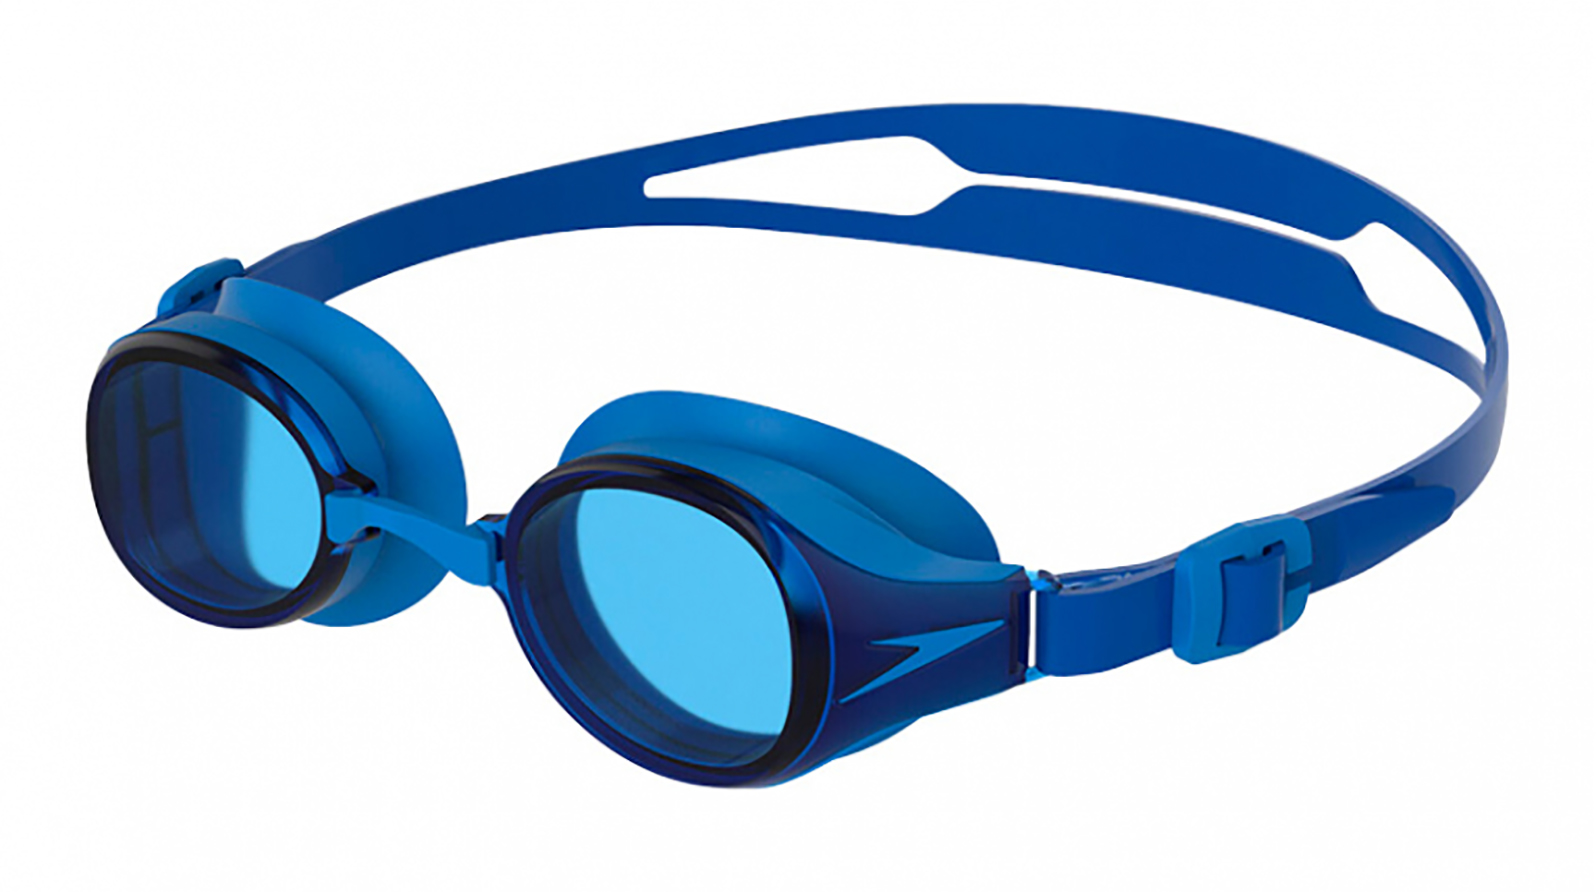 Speedo Очки для плавания Hydropure Optical F809 -4.0 speedo очки для плавания hydropure optical f809 2 5